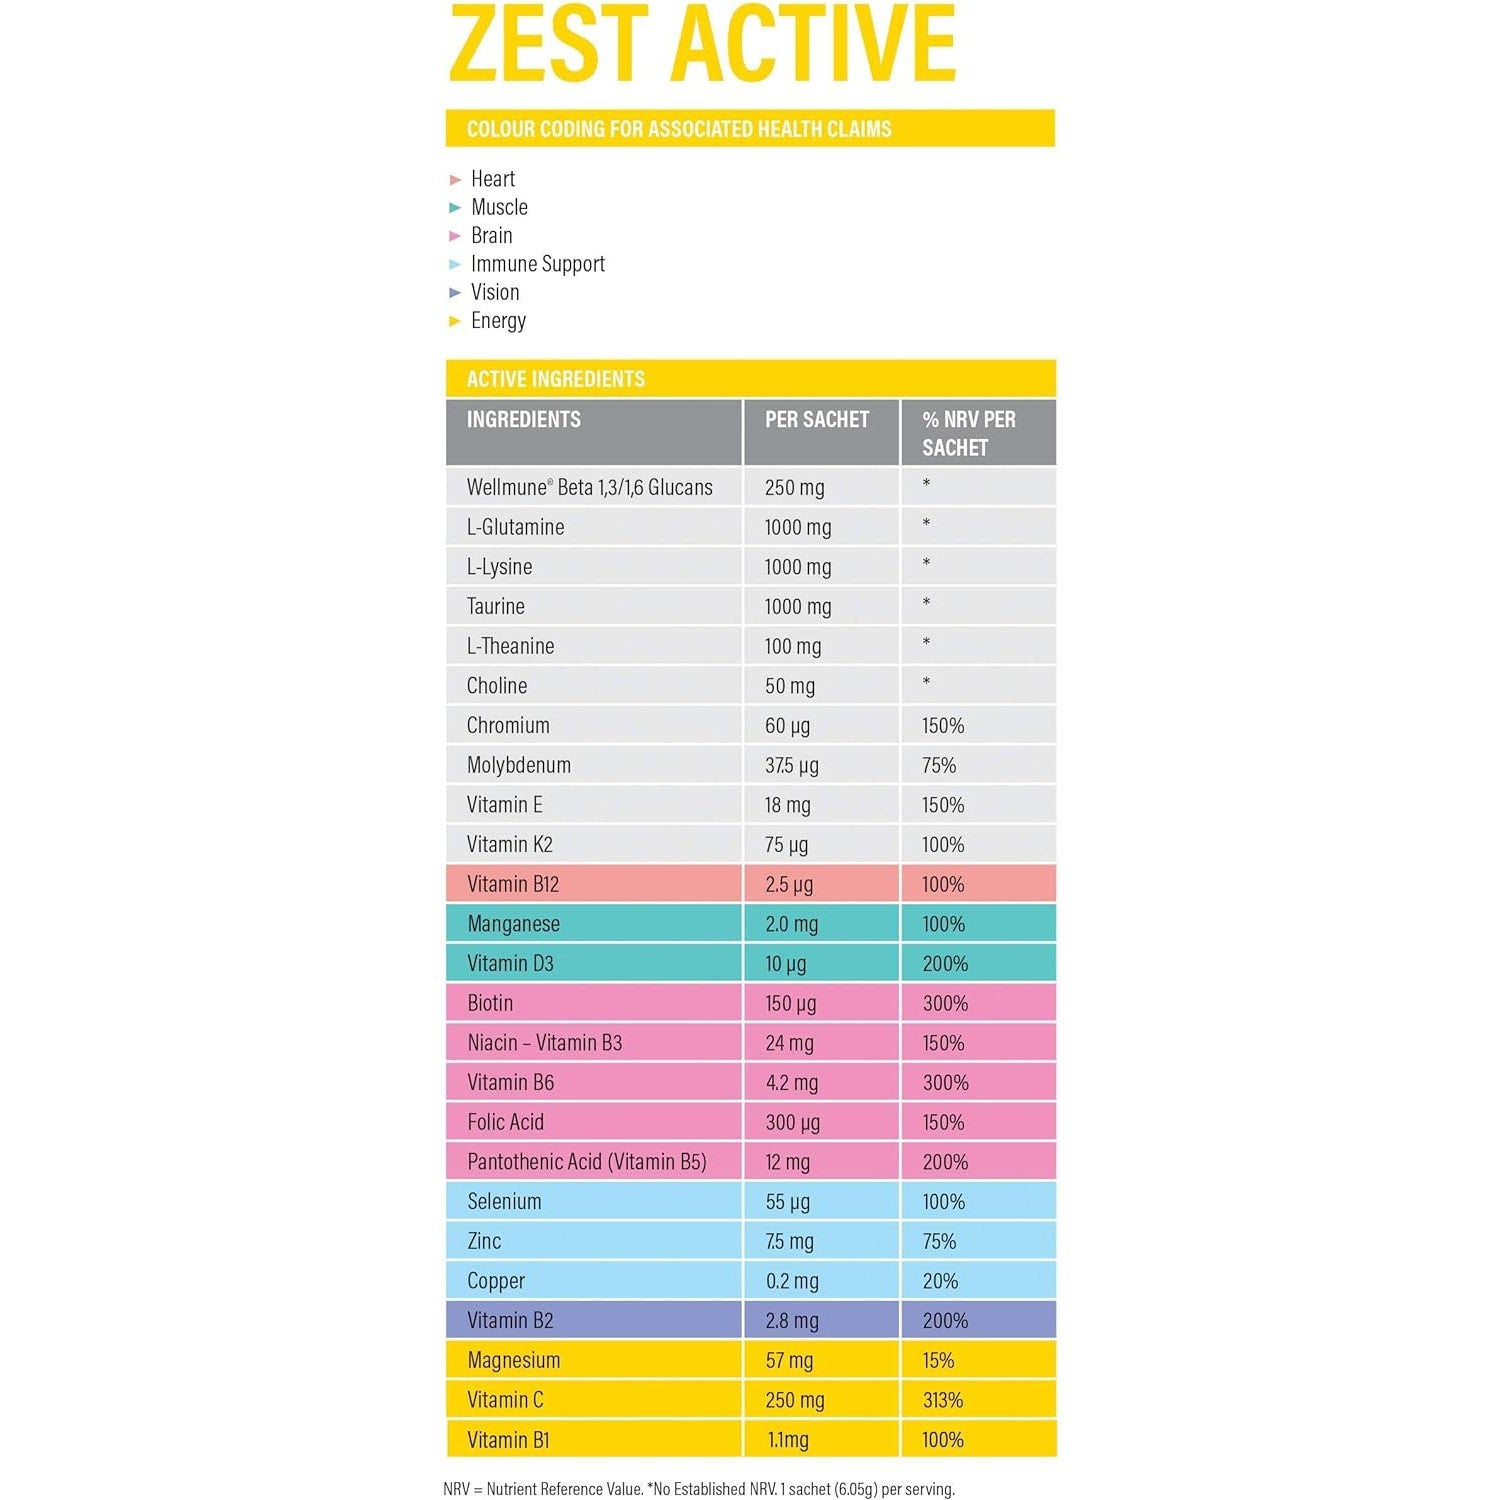 Revive Active Super Supplement Zest Active 30 day pack